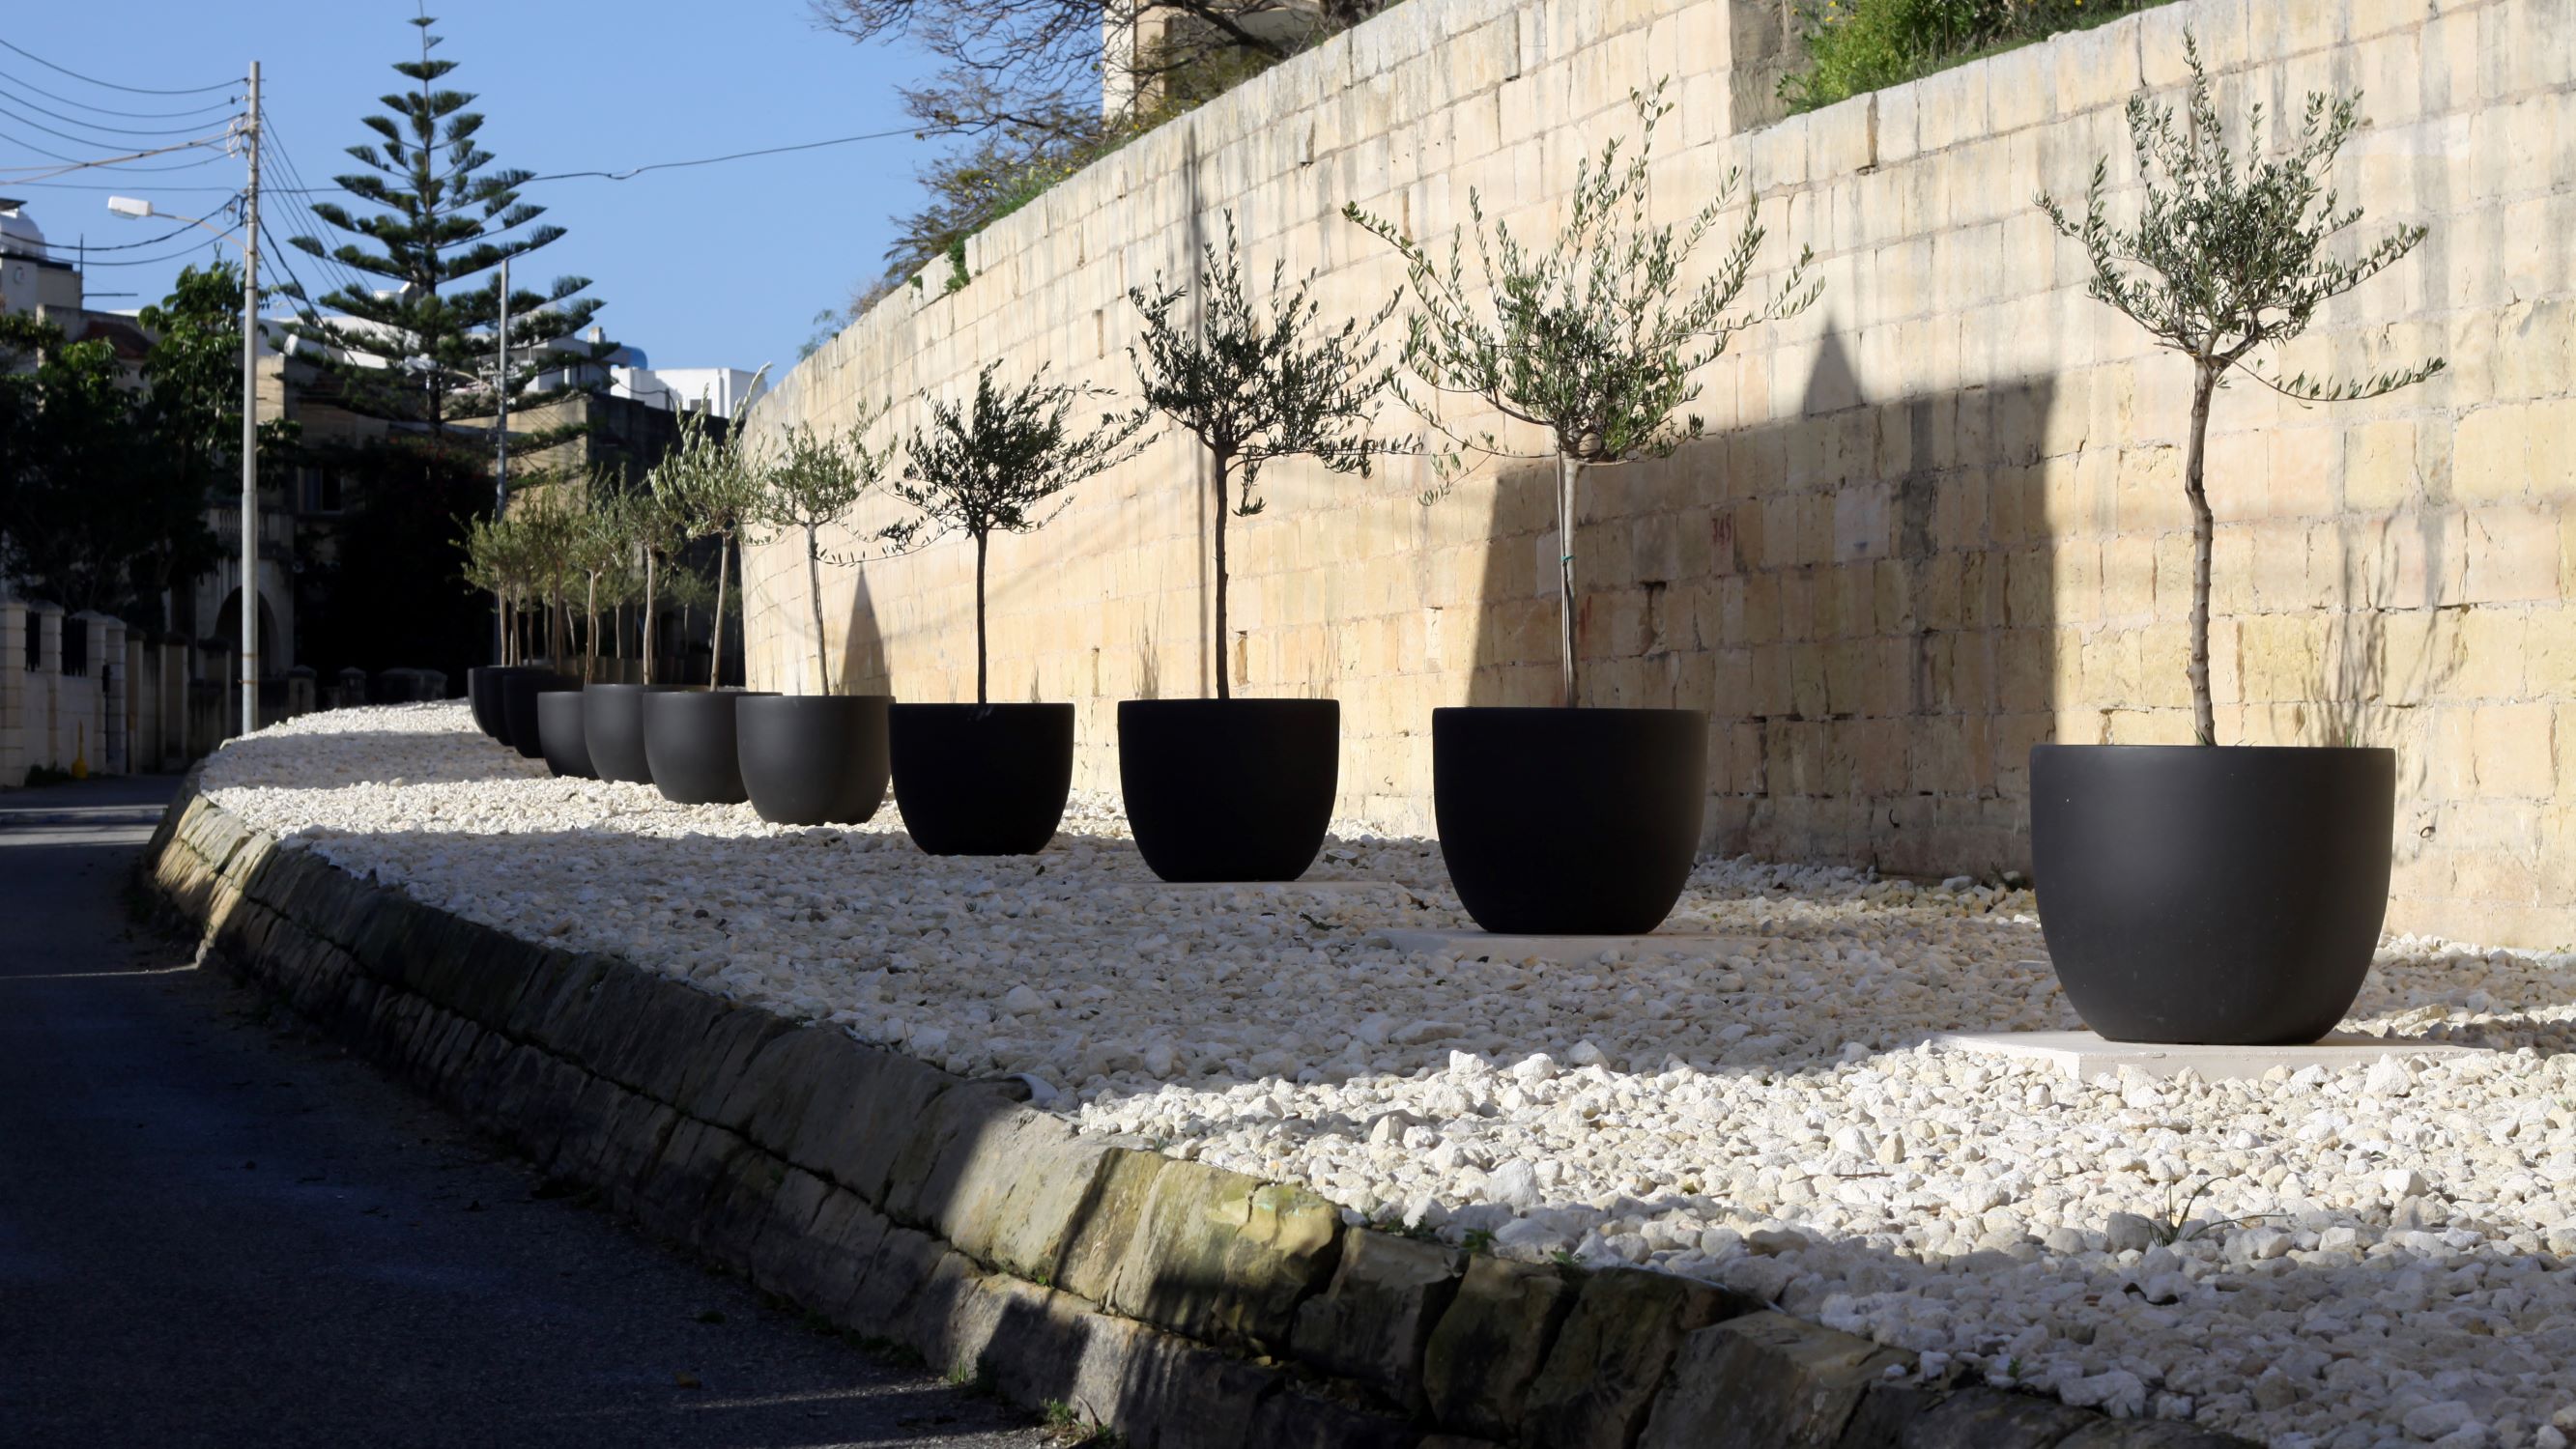 110 new olive trees for Attard’s historic railway embankment